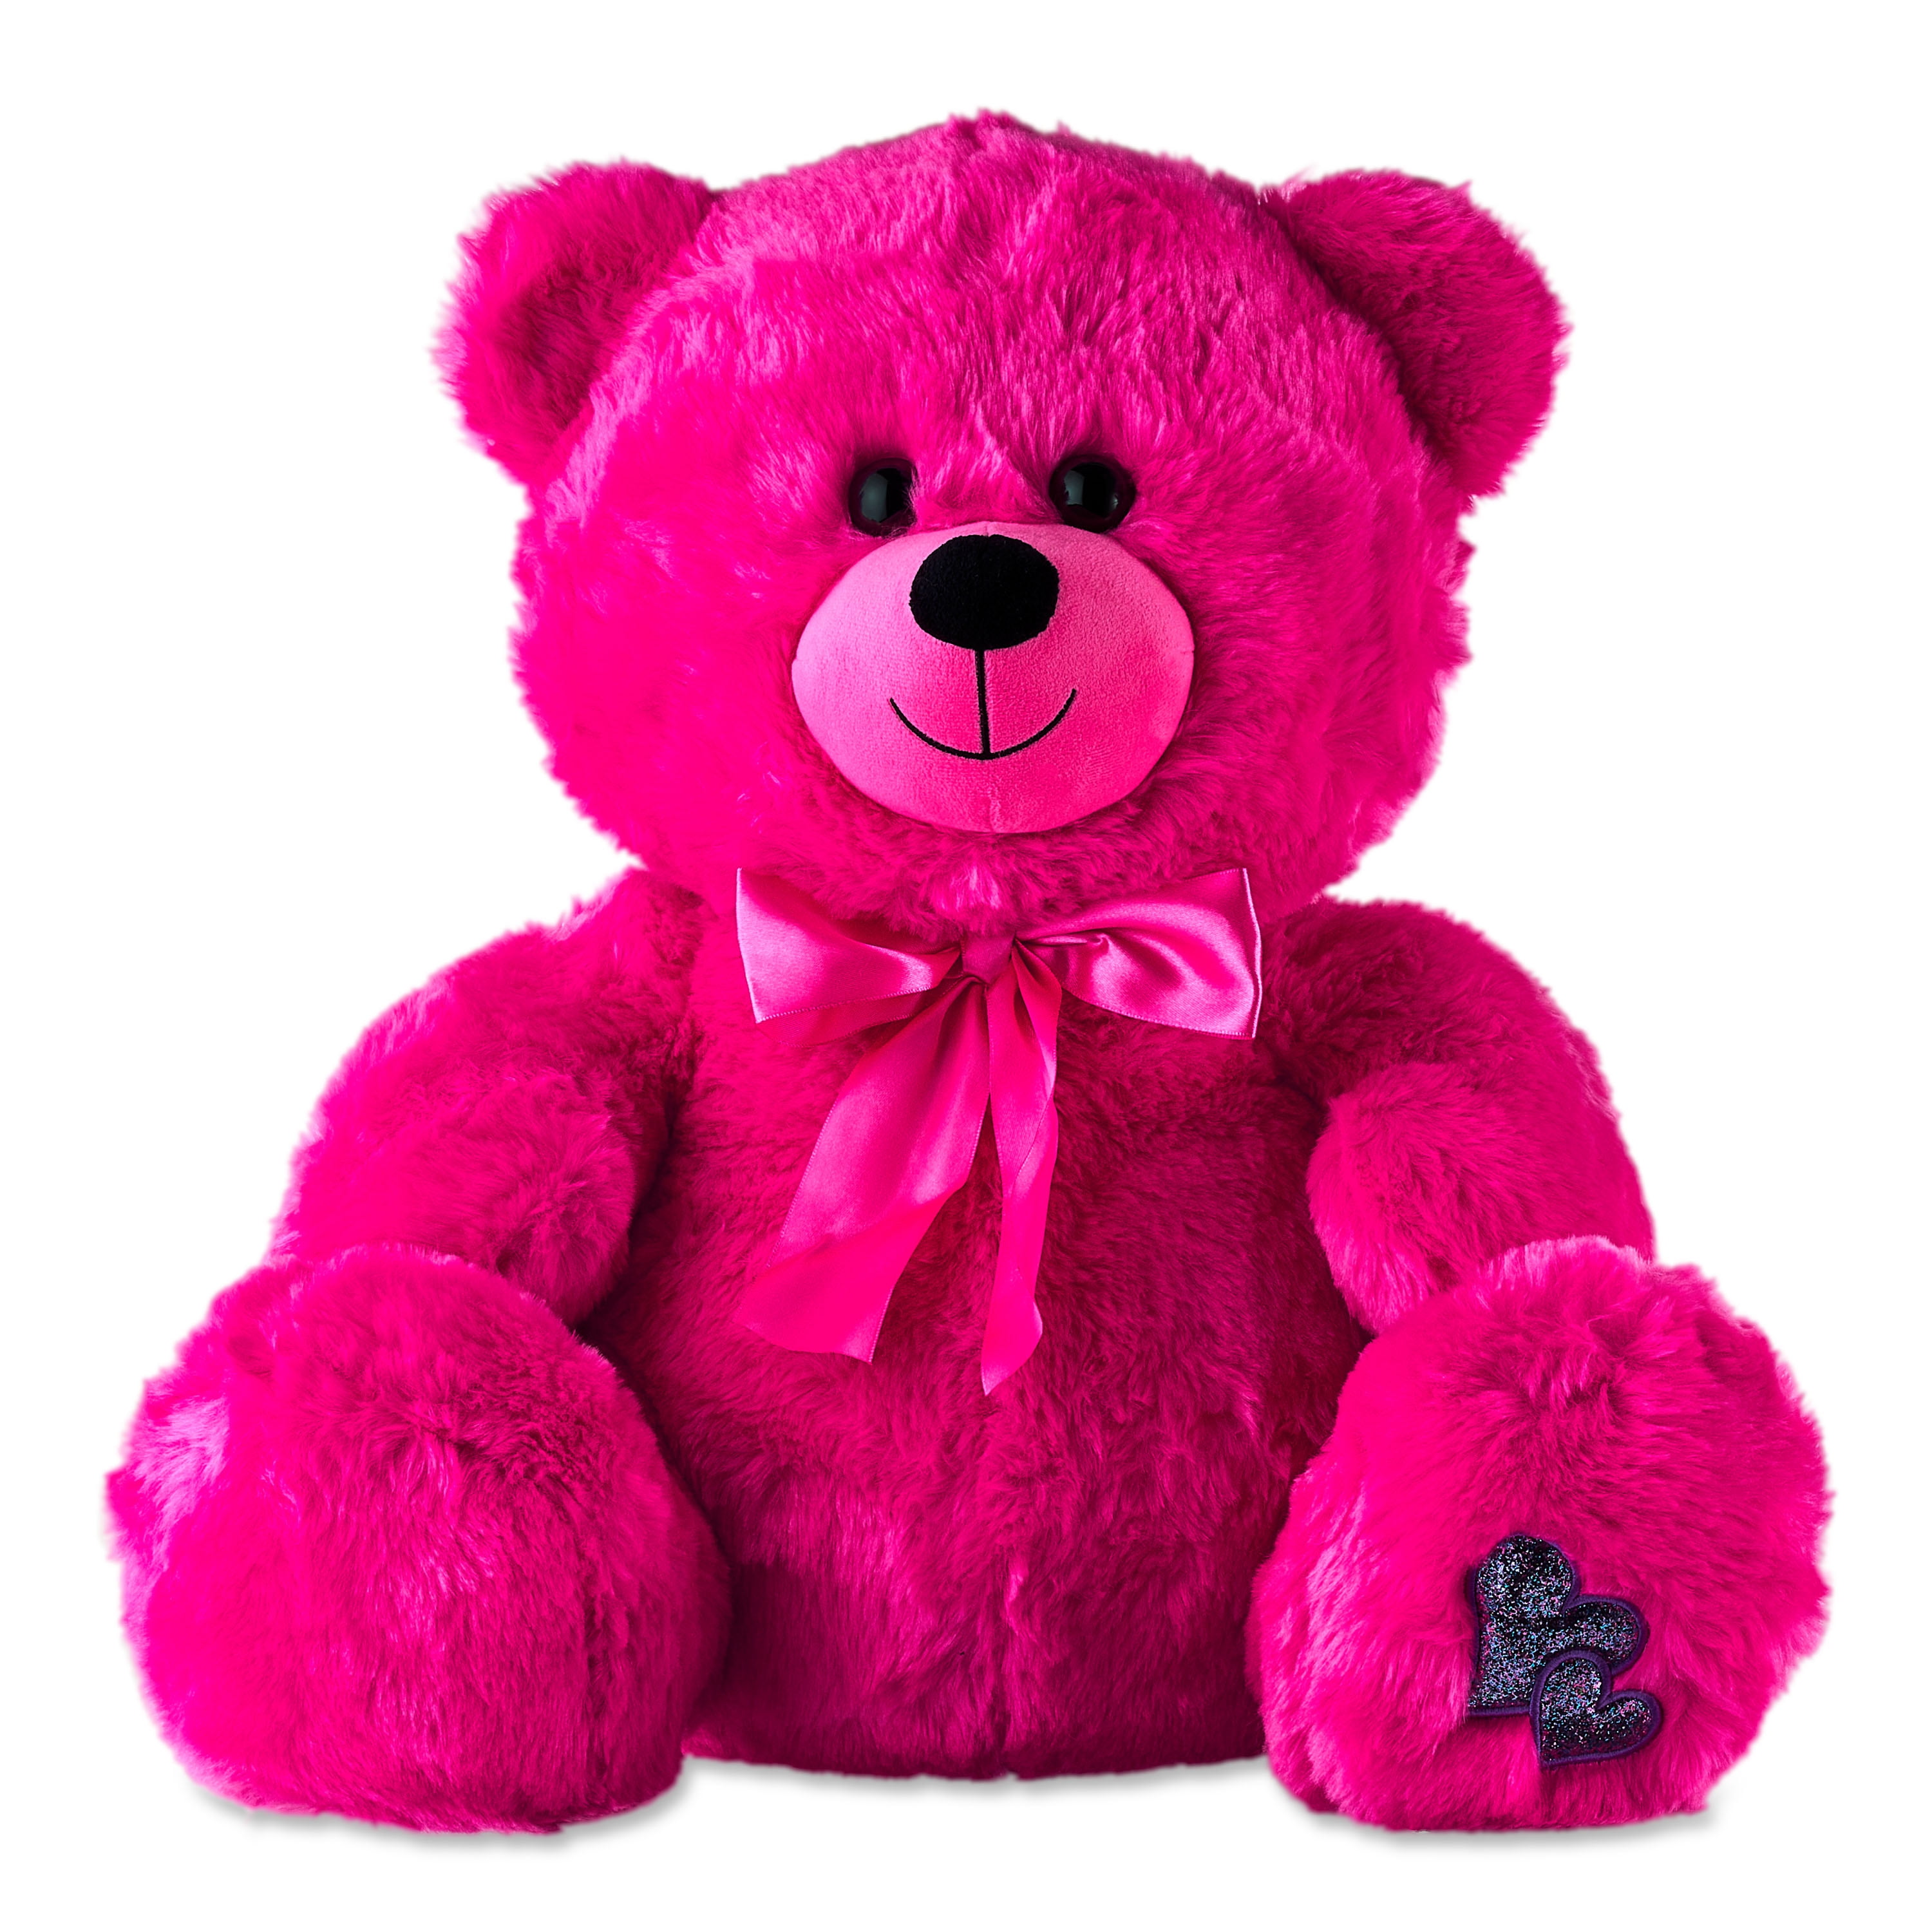 WAY TO CELEBRATE! Way To Celebrate Plush Candy Pink Bear